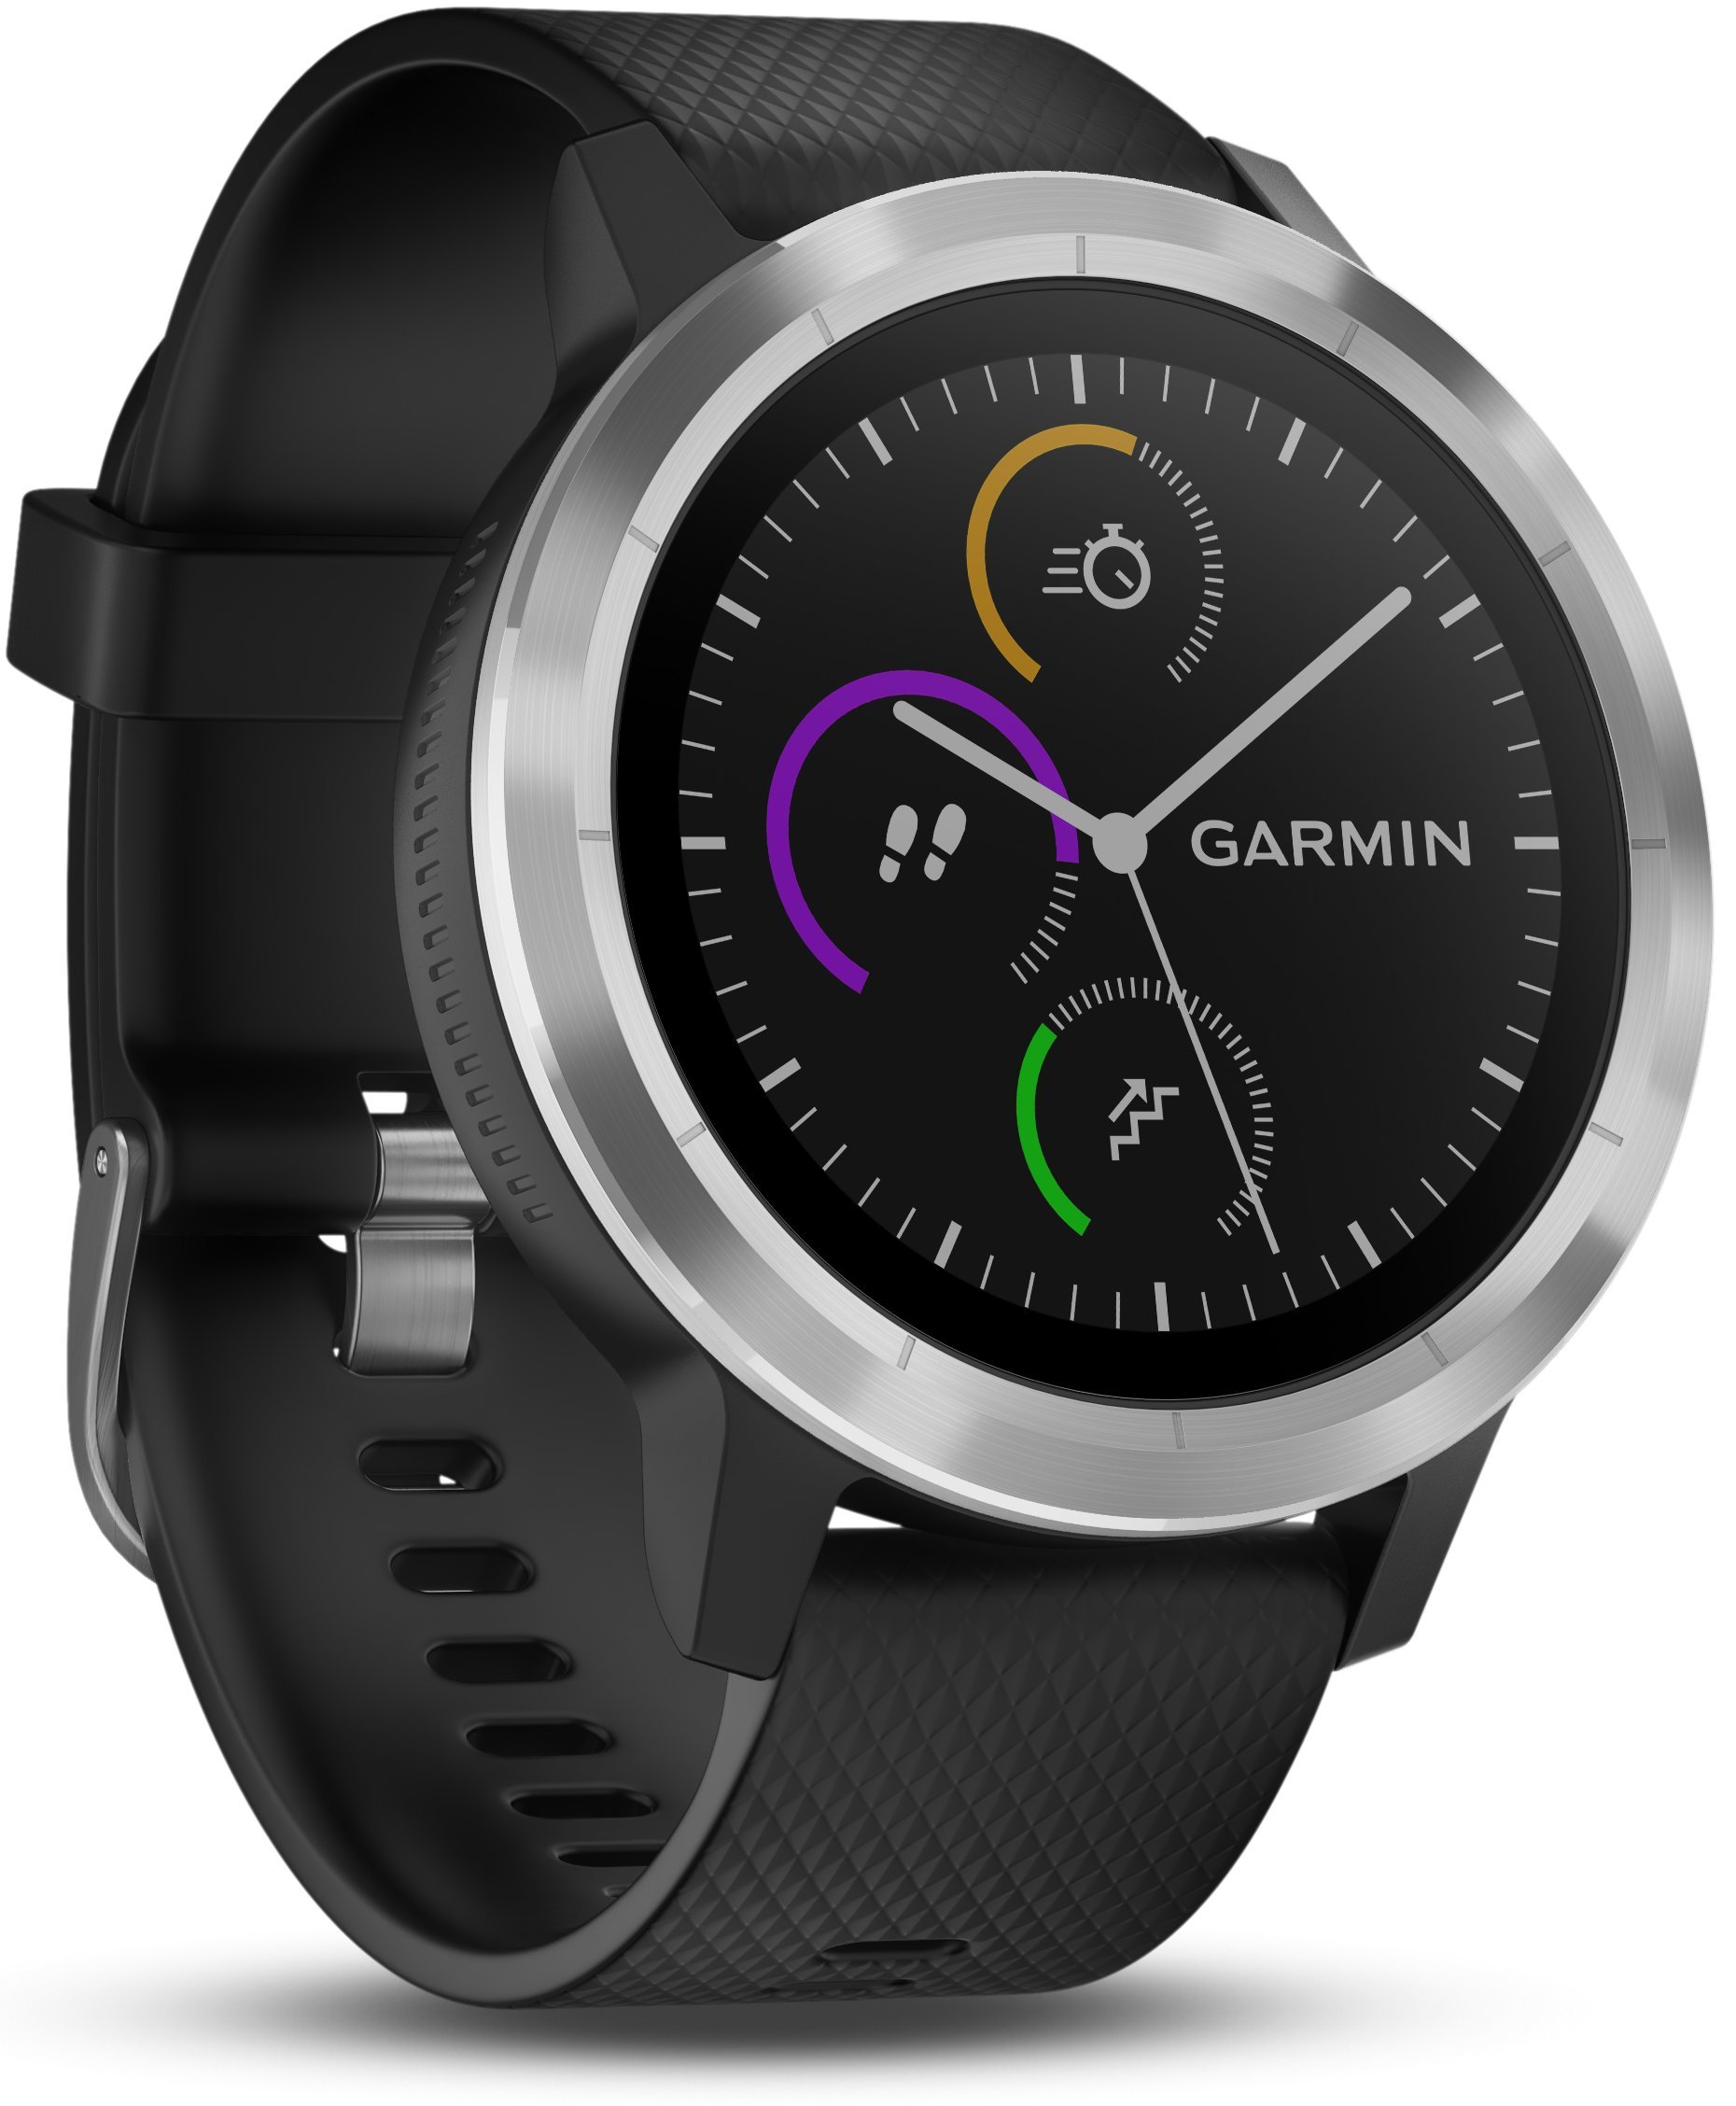 Garmin vívoactive 3 GPS Smartwatch - Black & Stainless